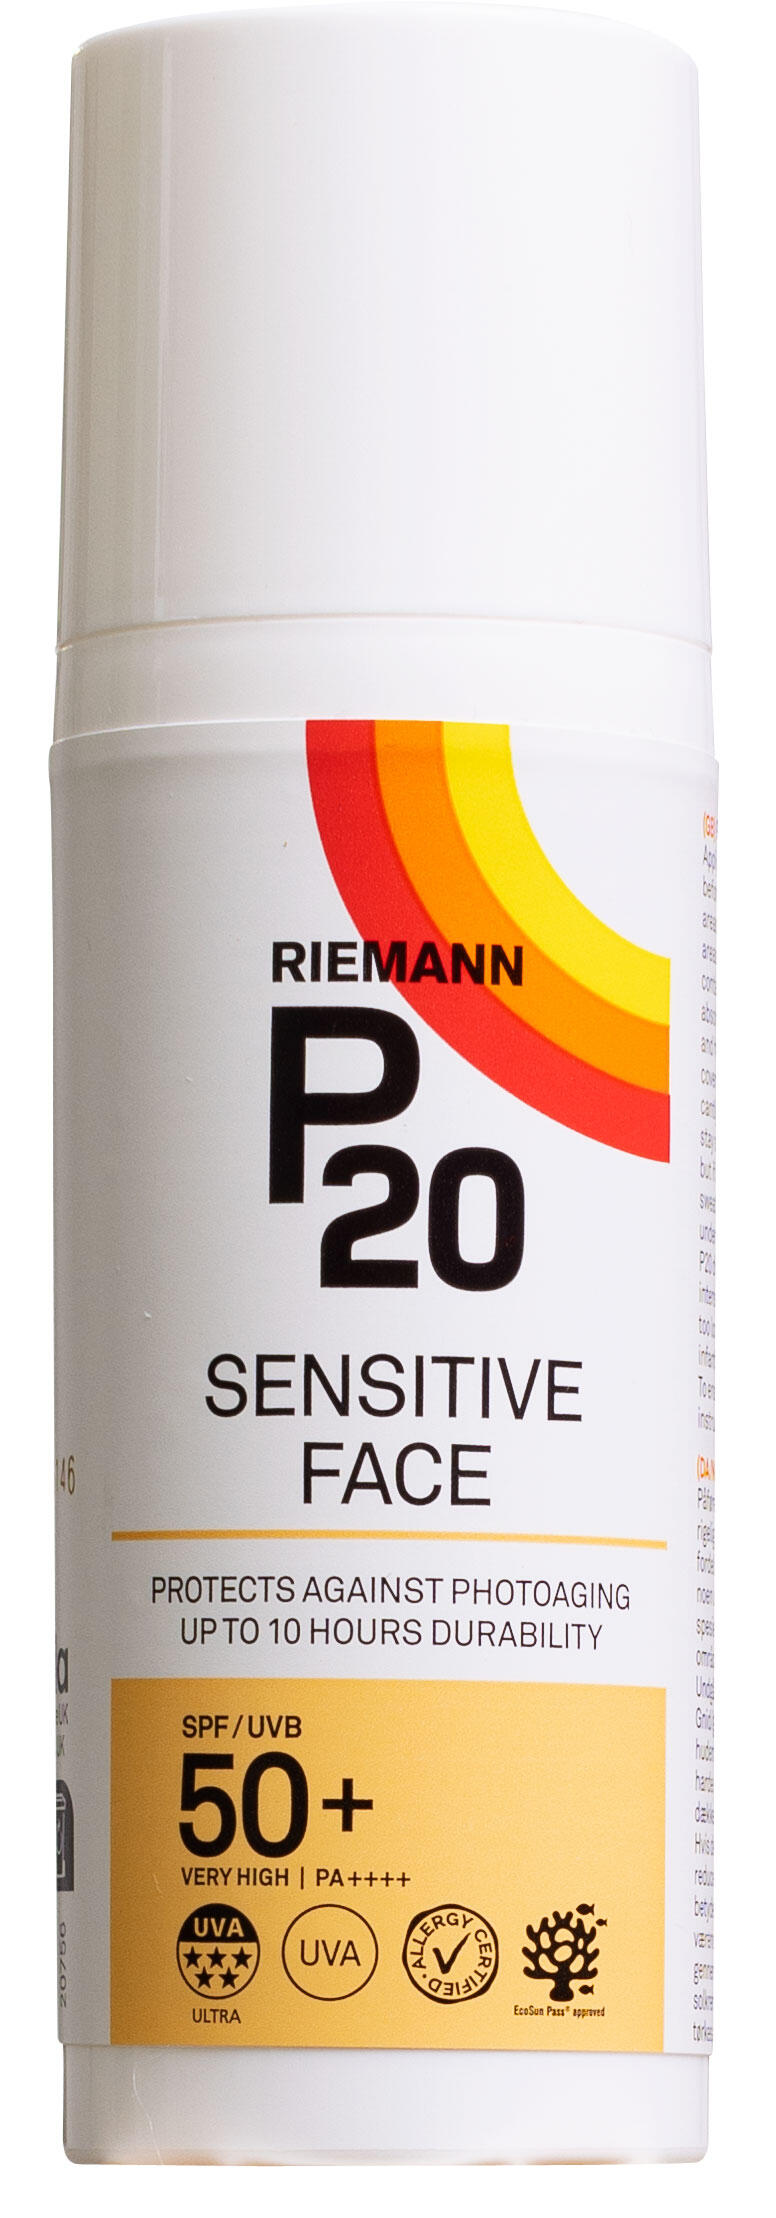 Sensitive face SPF 50+ Riemann P20